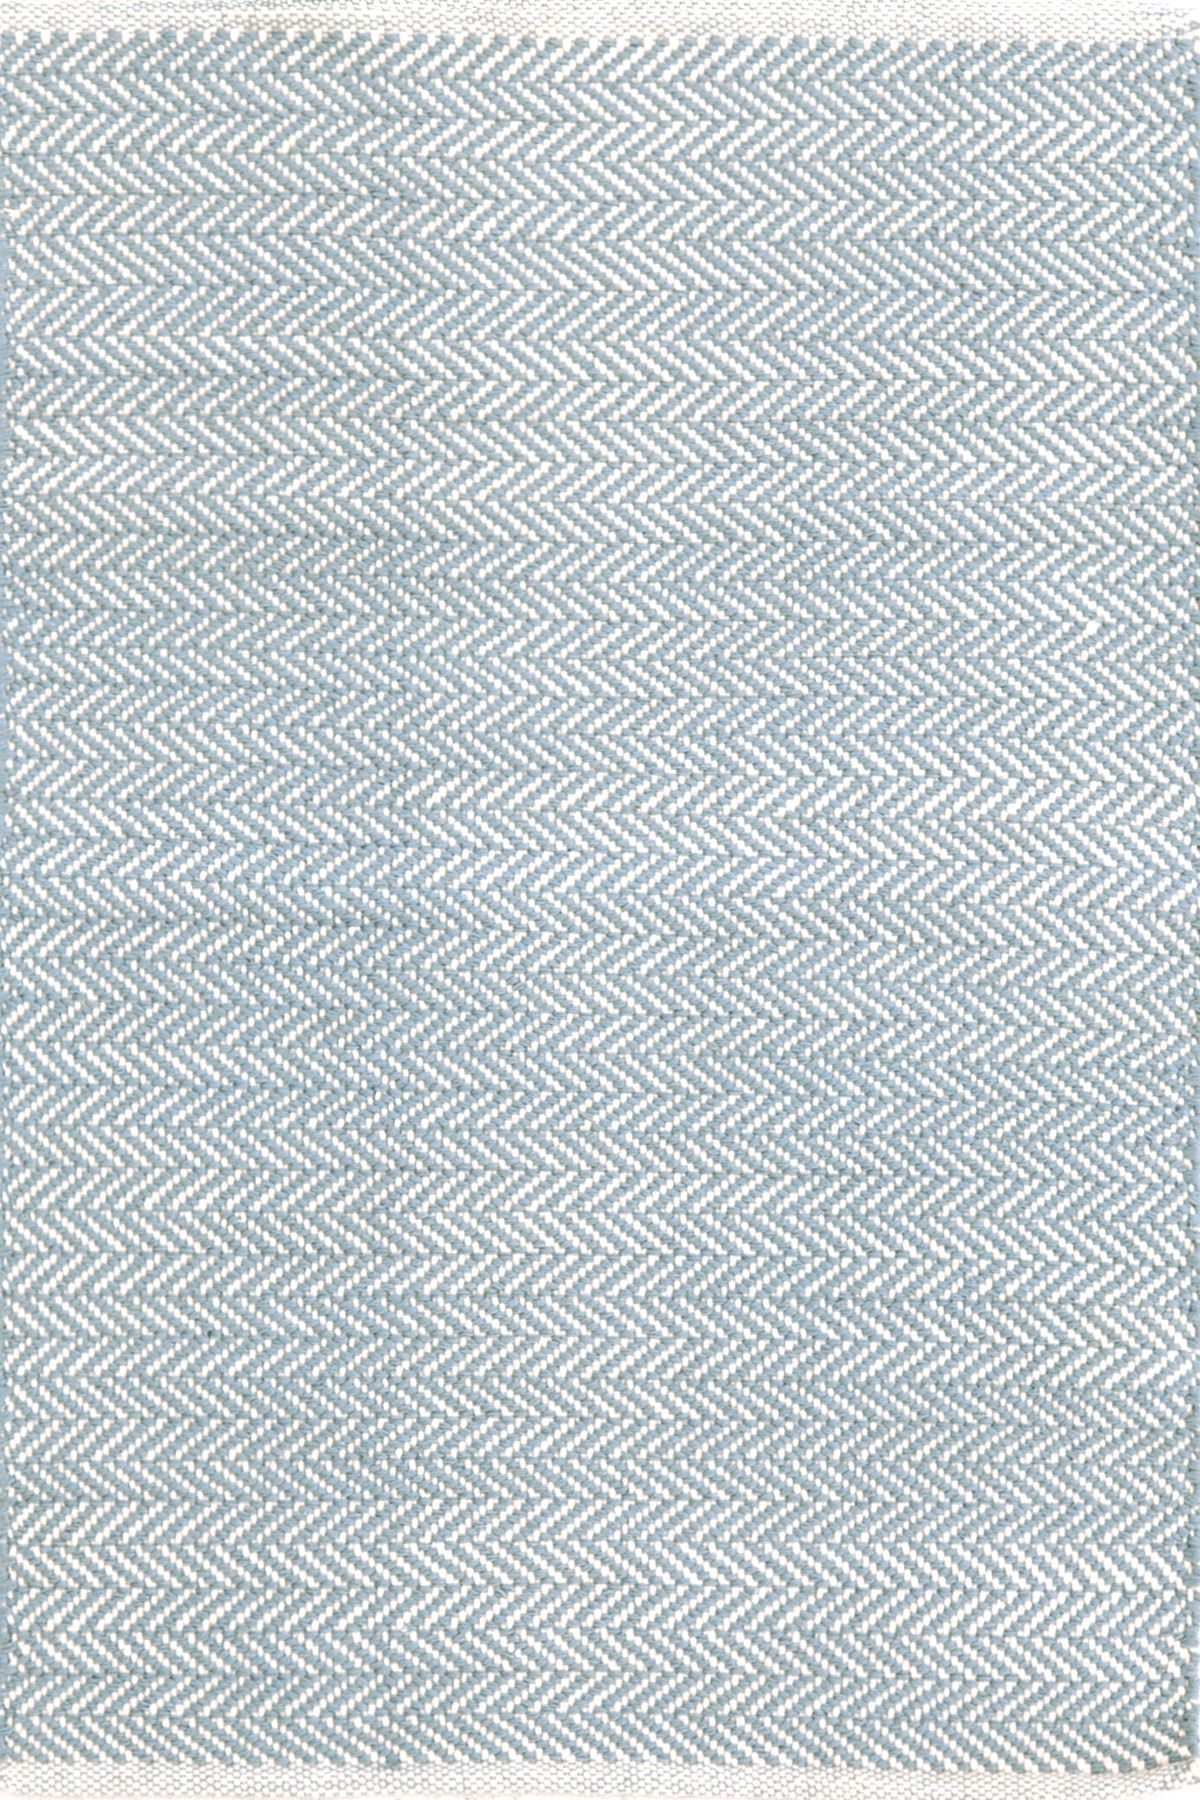 Herringbone Swedish Blue Woven Cotton Rug, 8' x 10' - Image 0